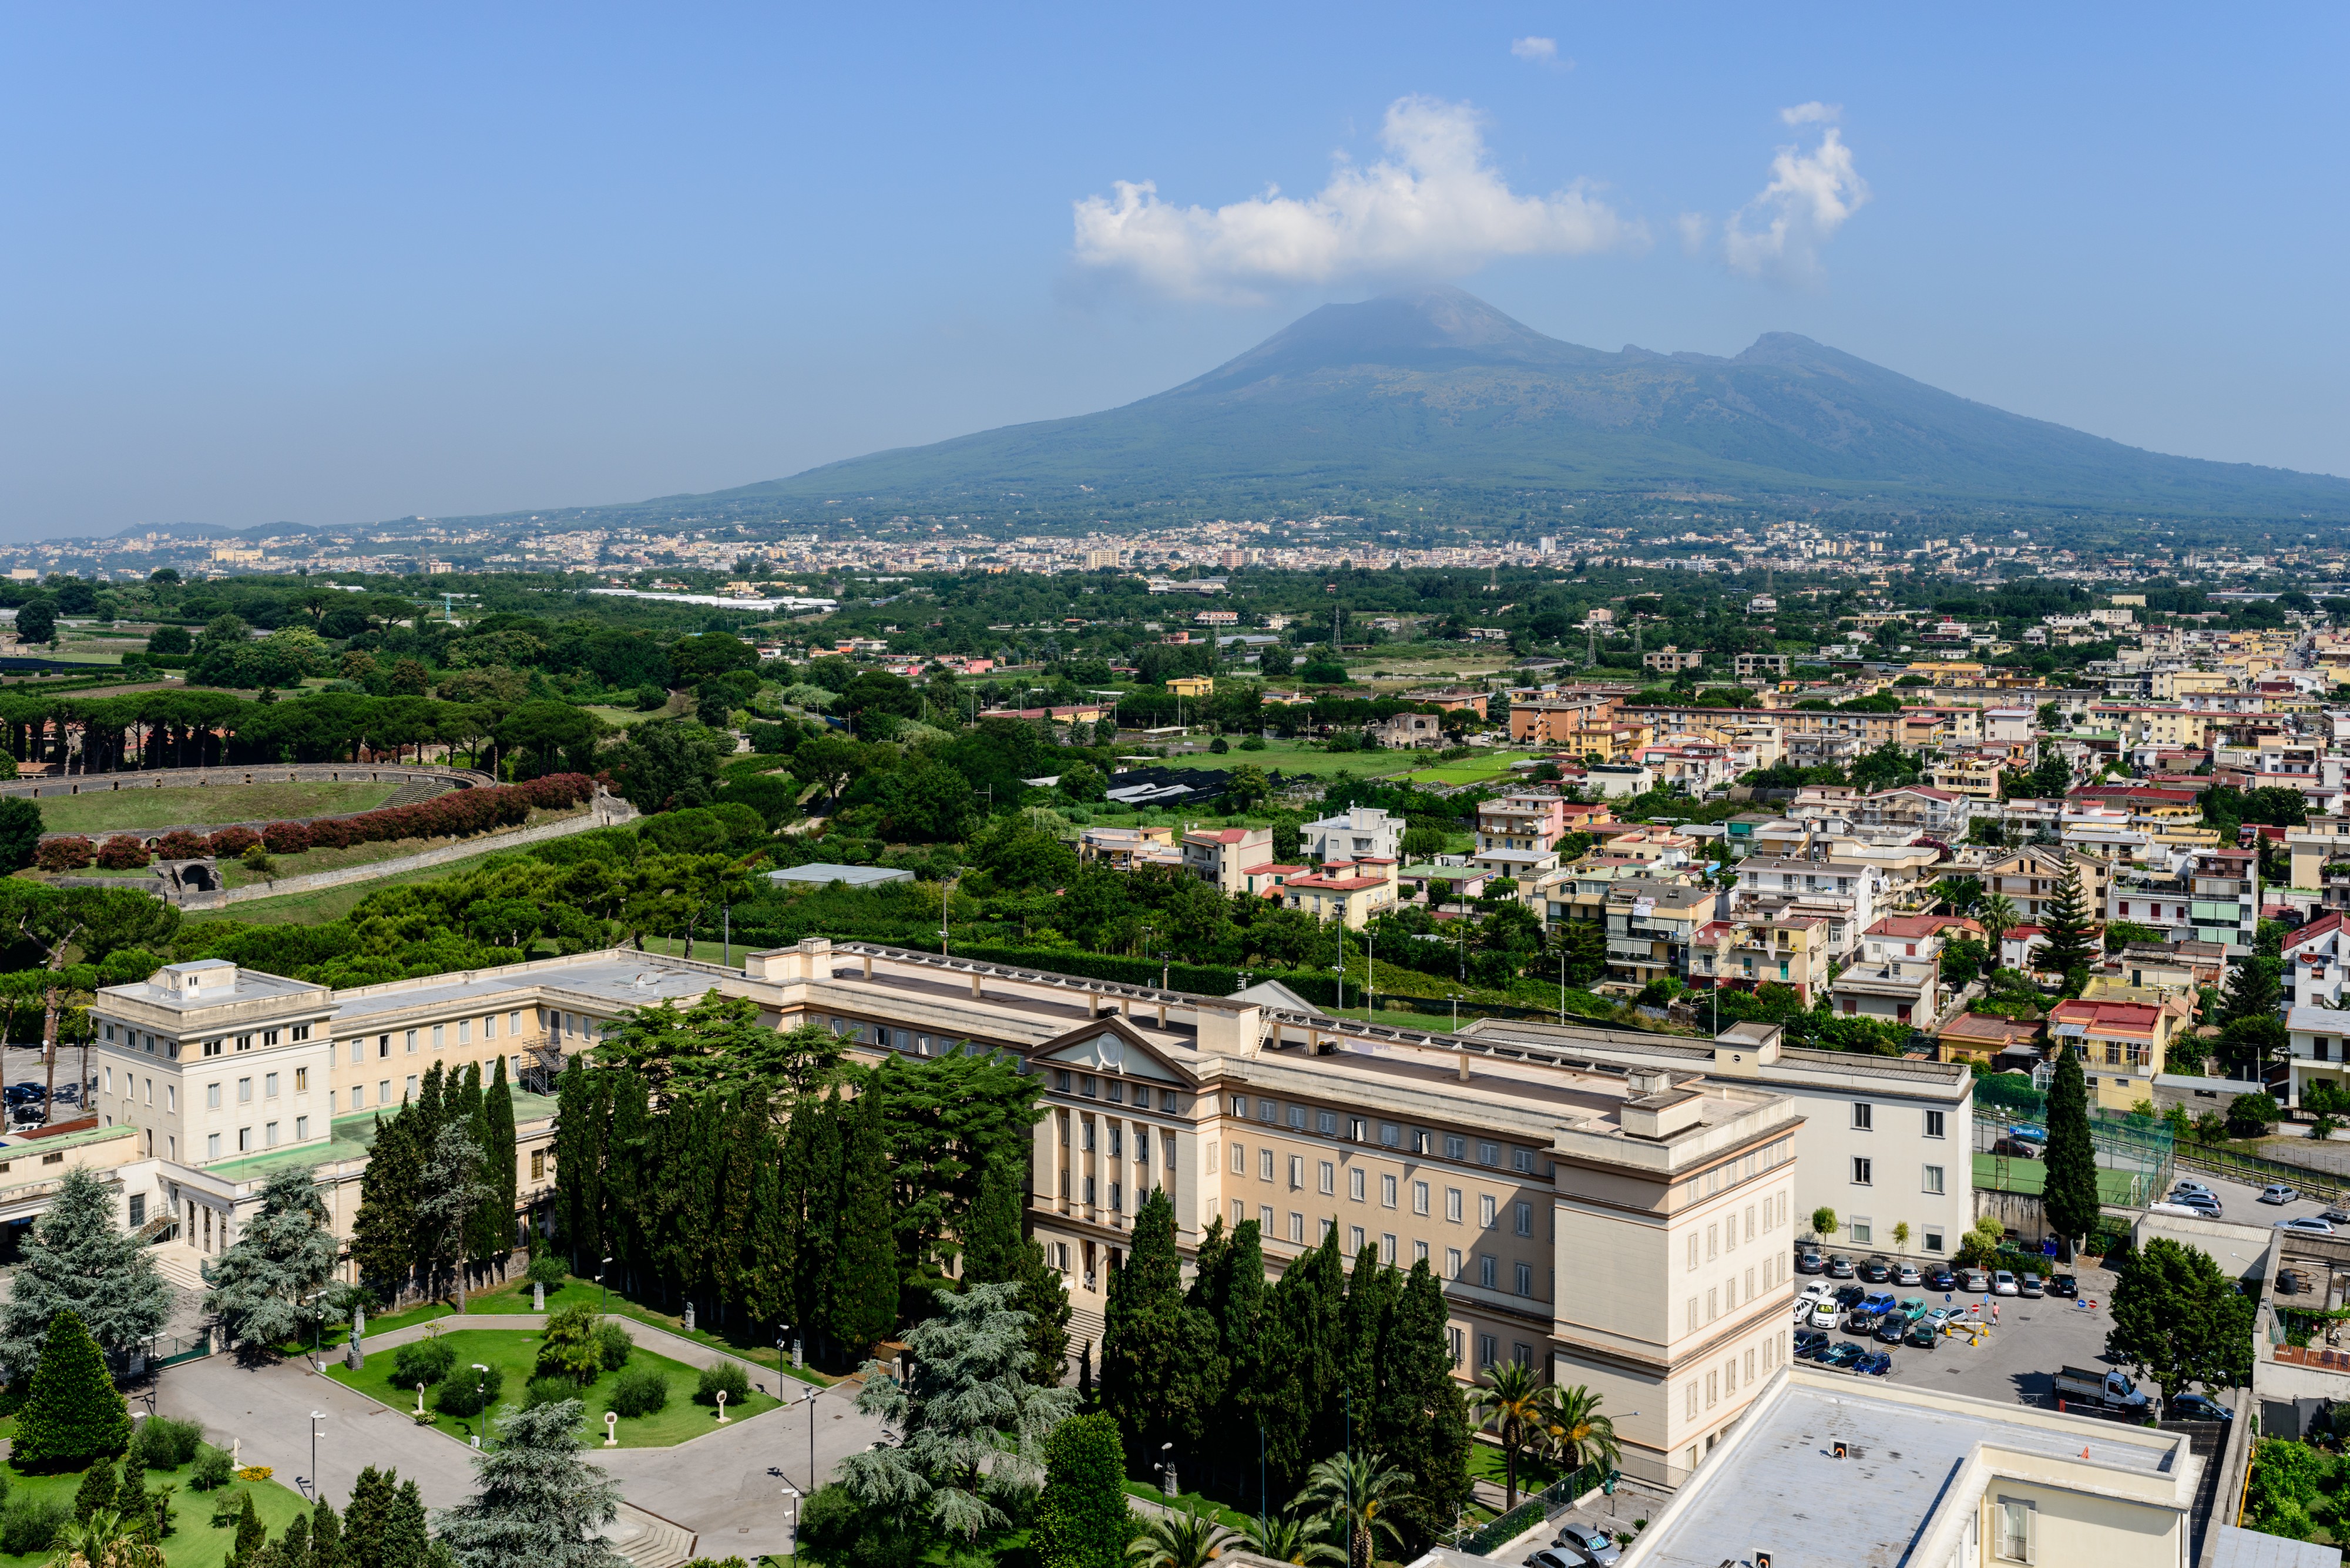 Boscoreale - Pompei - Vesuvius - Campania - Italy - 2013